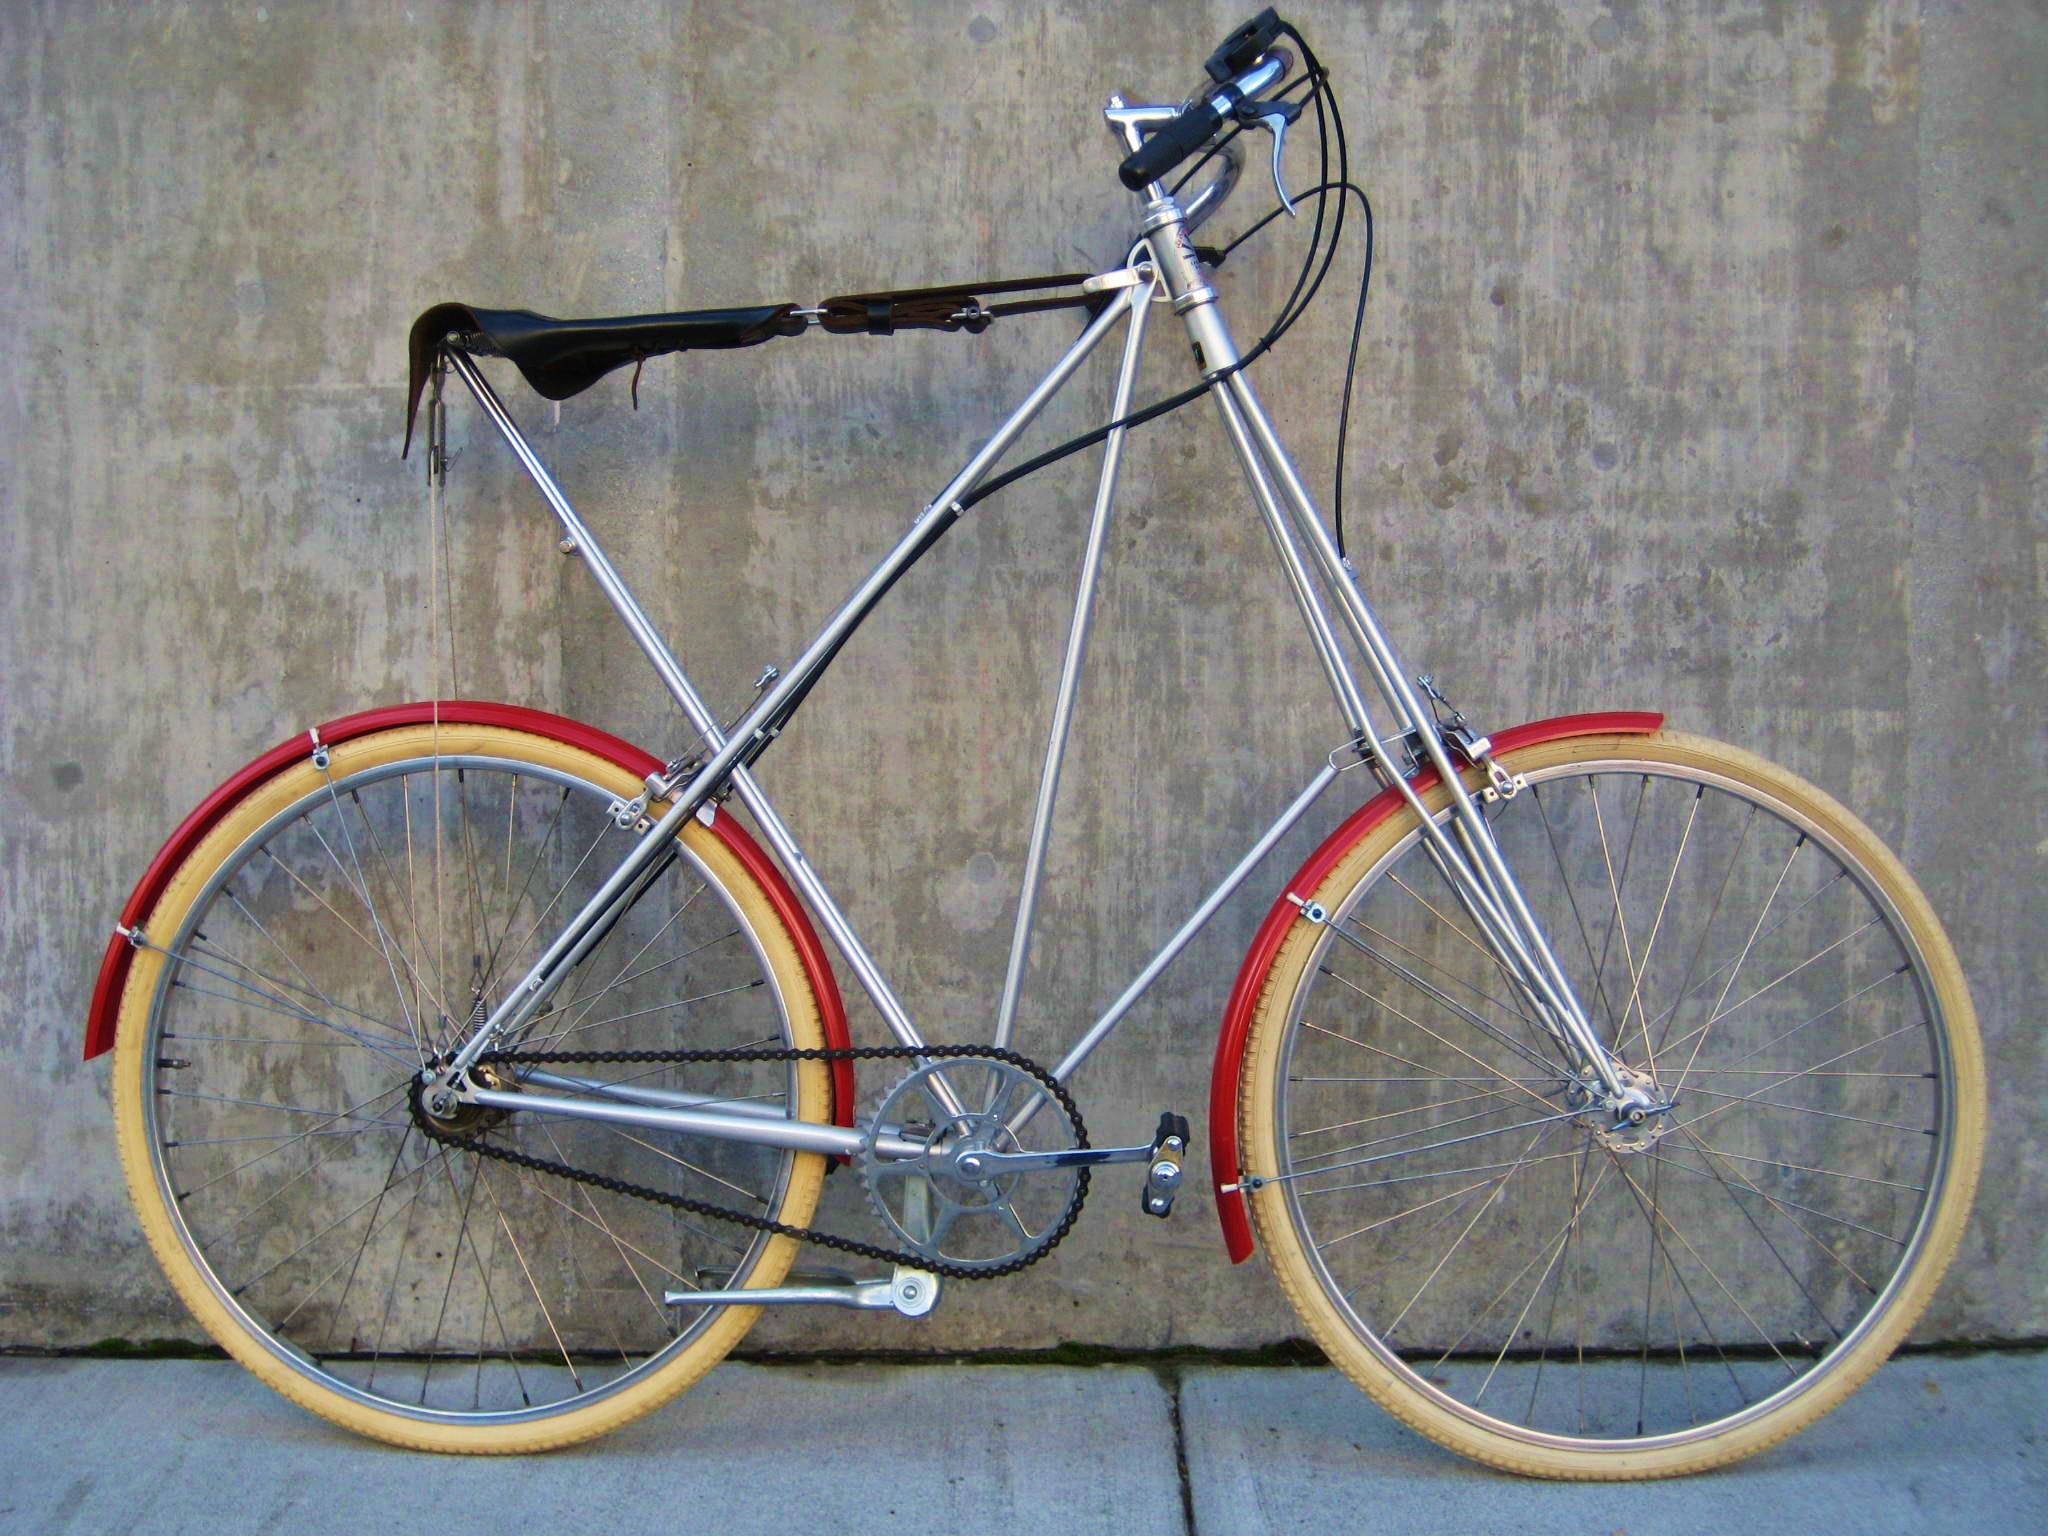 1978 Cheltenham Pedersen bicycle on display at Classic